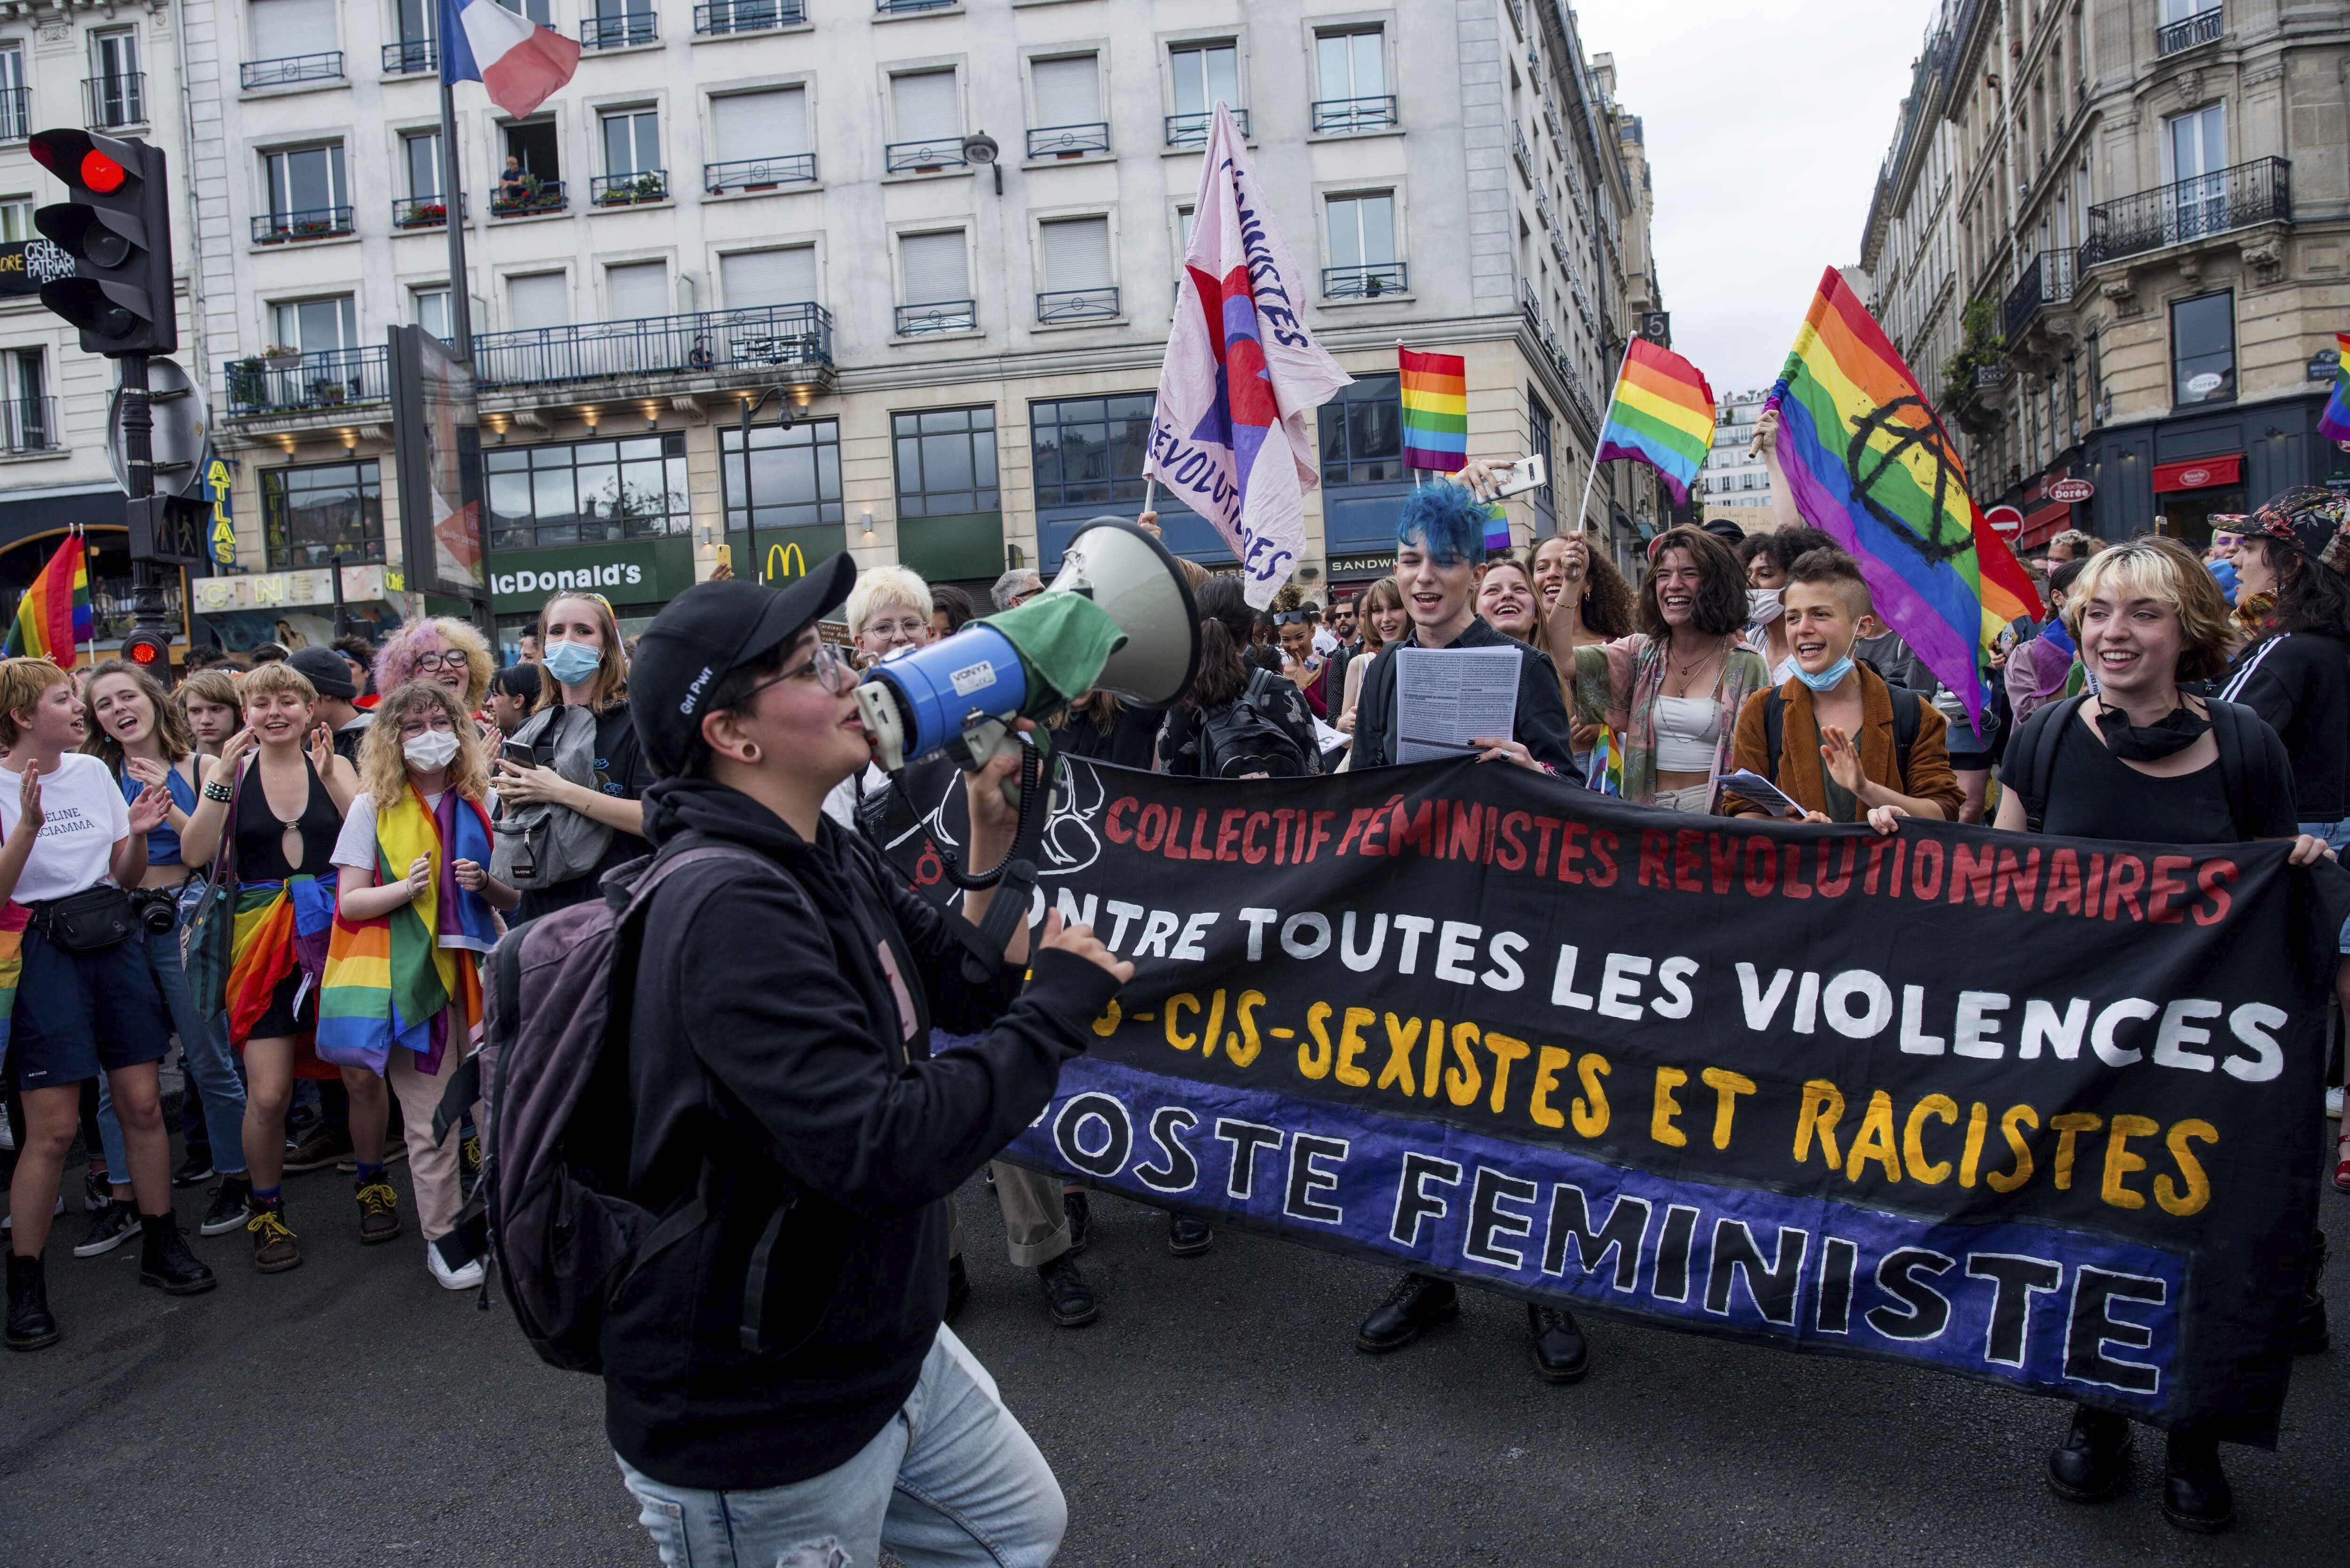 At Pride march in Paris, activists demand racial justice too